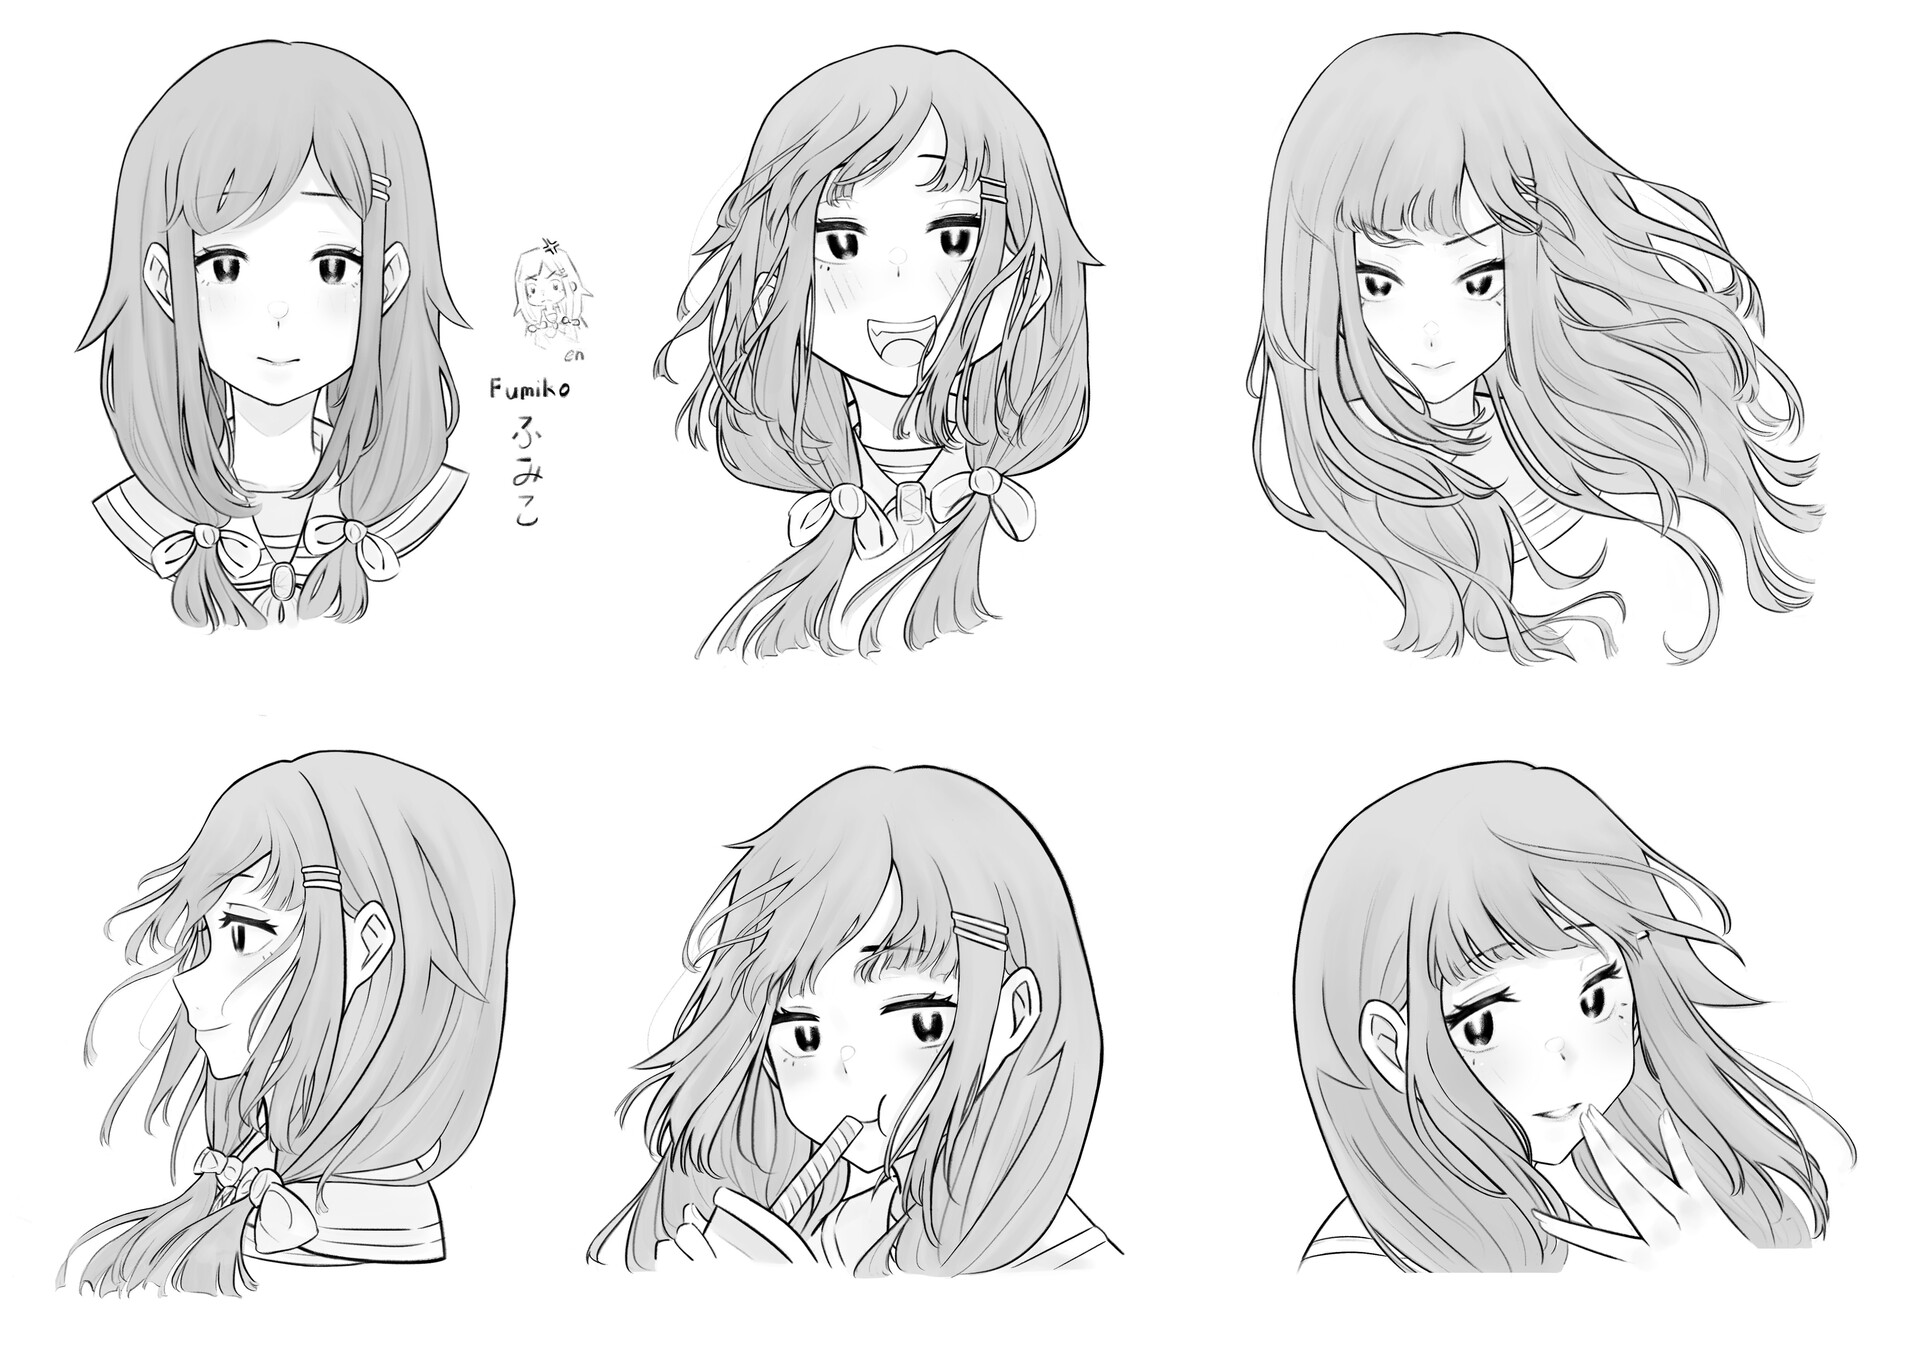 via How to Draw Anime and Manga Noses | Anime... - Art References